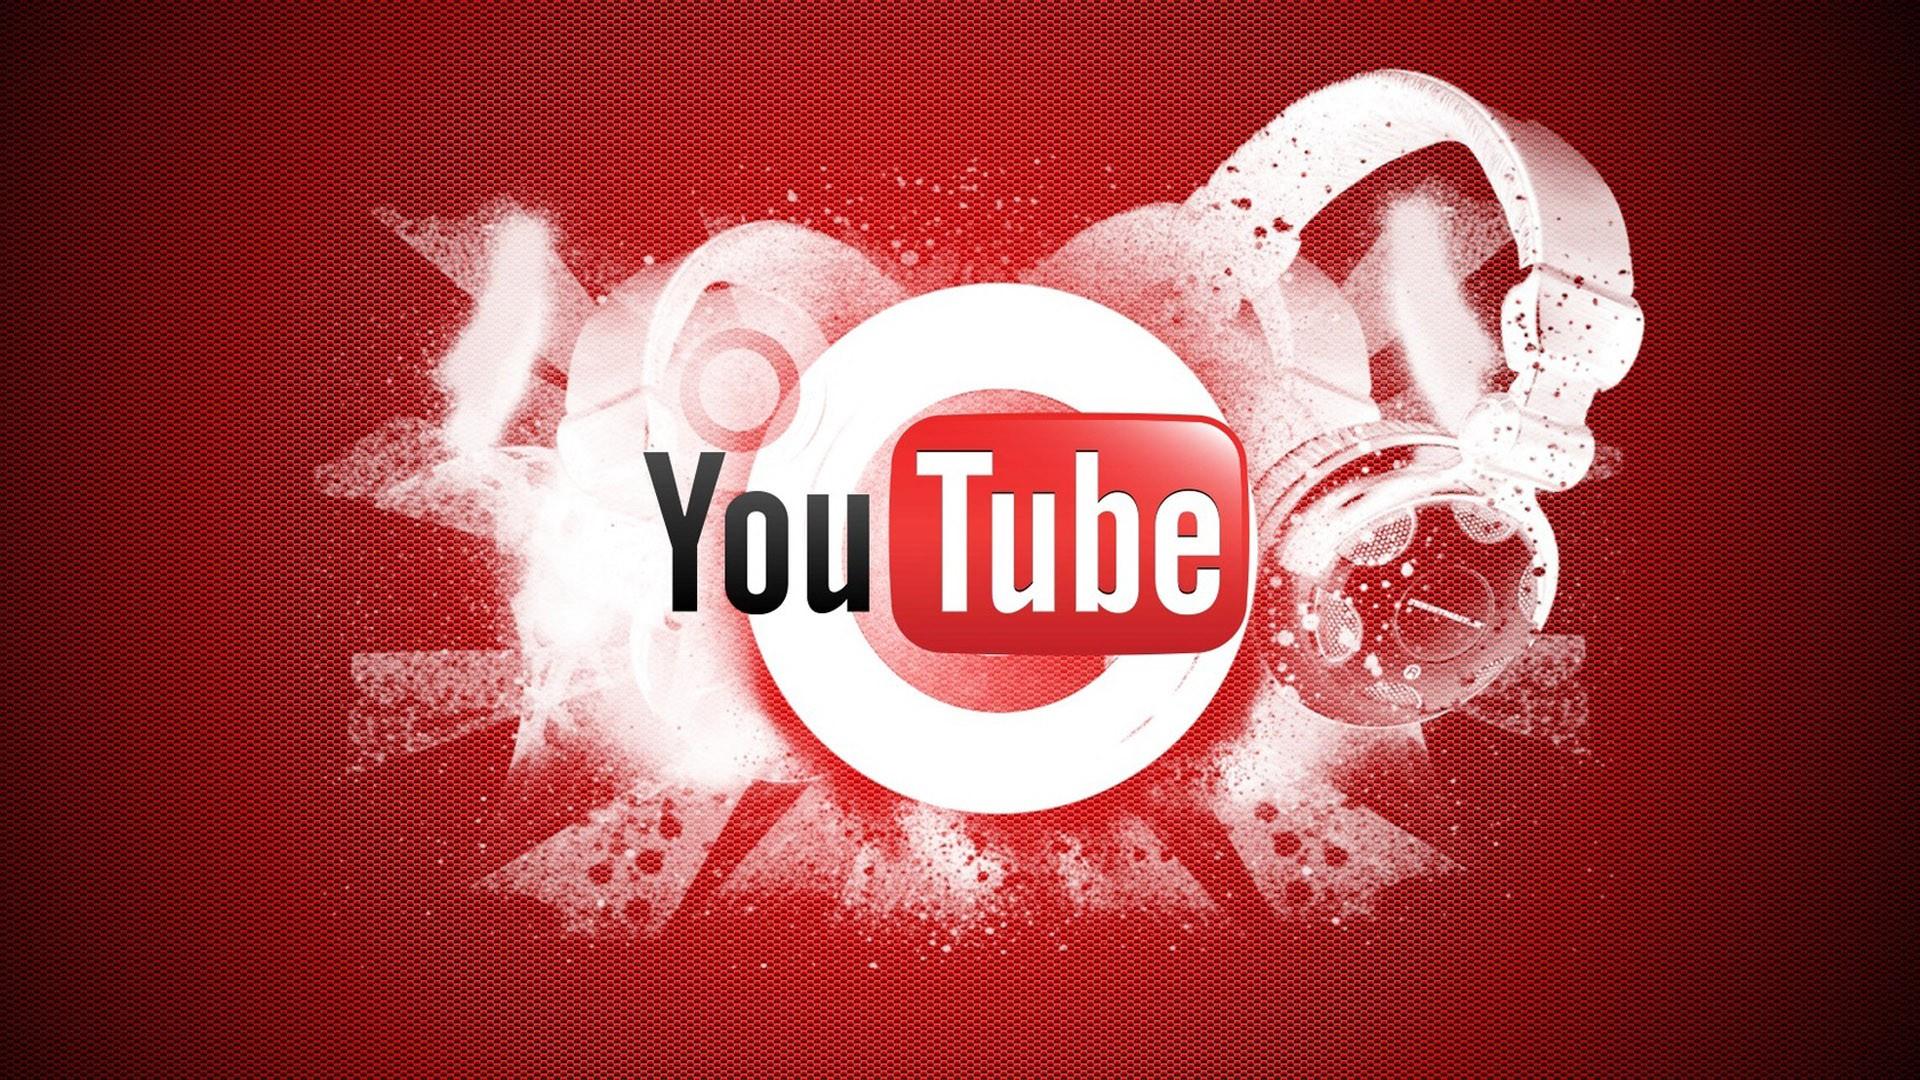 Logotipo de YouTube con fondo rojo